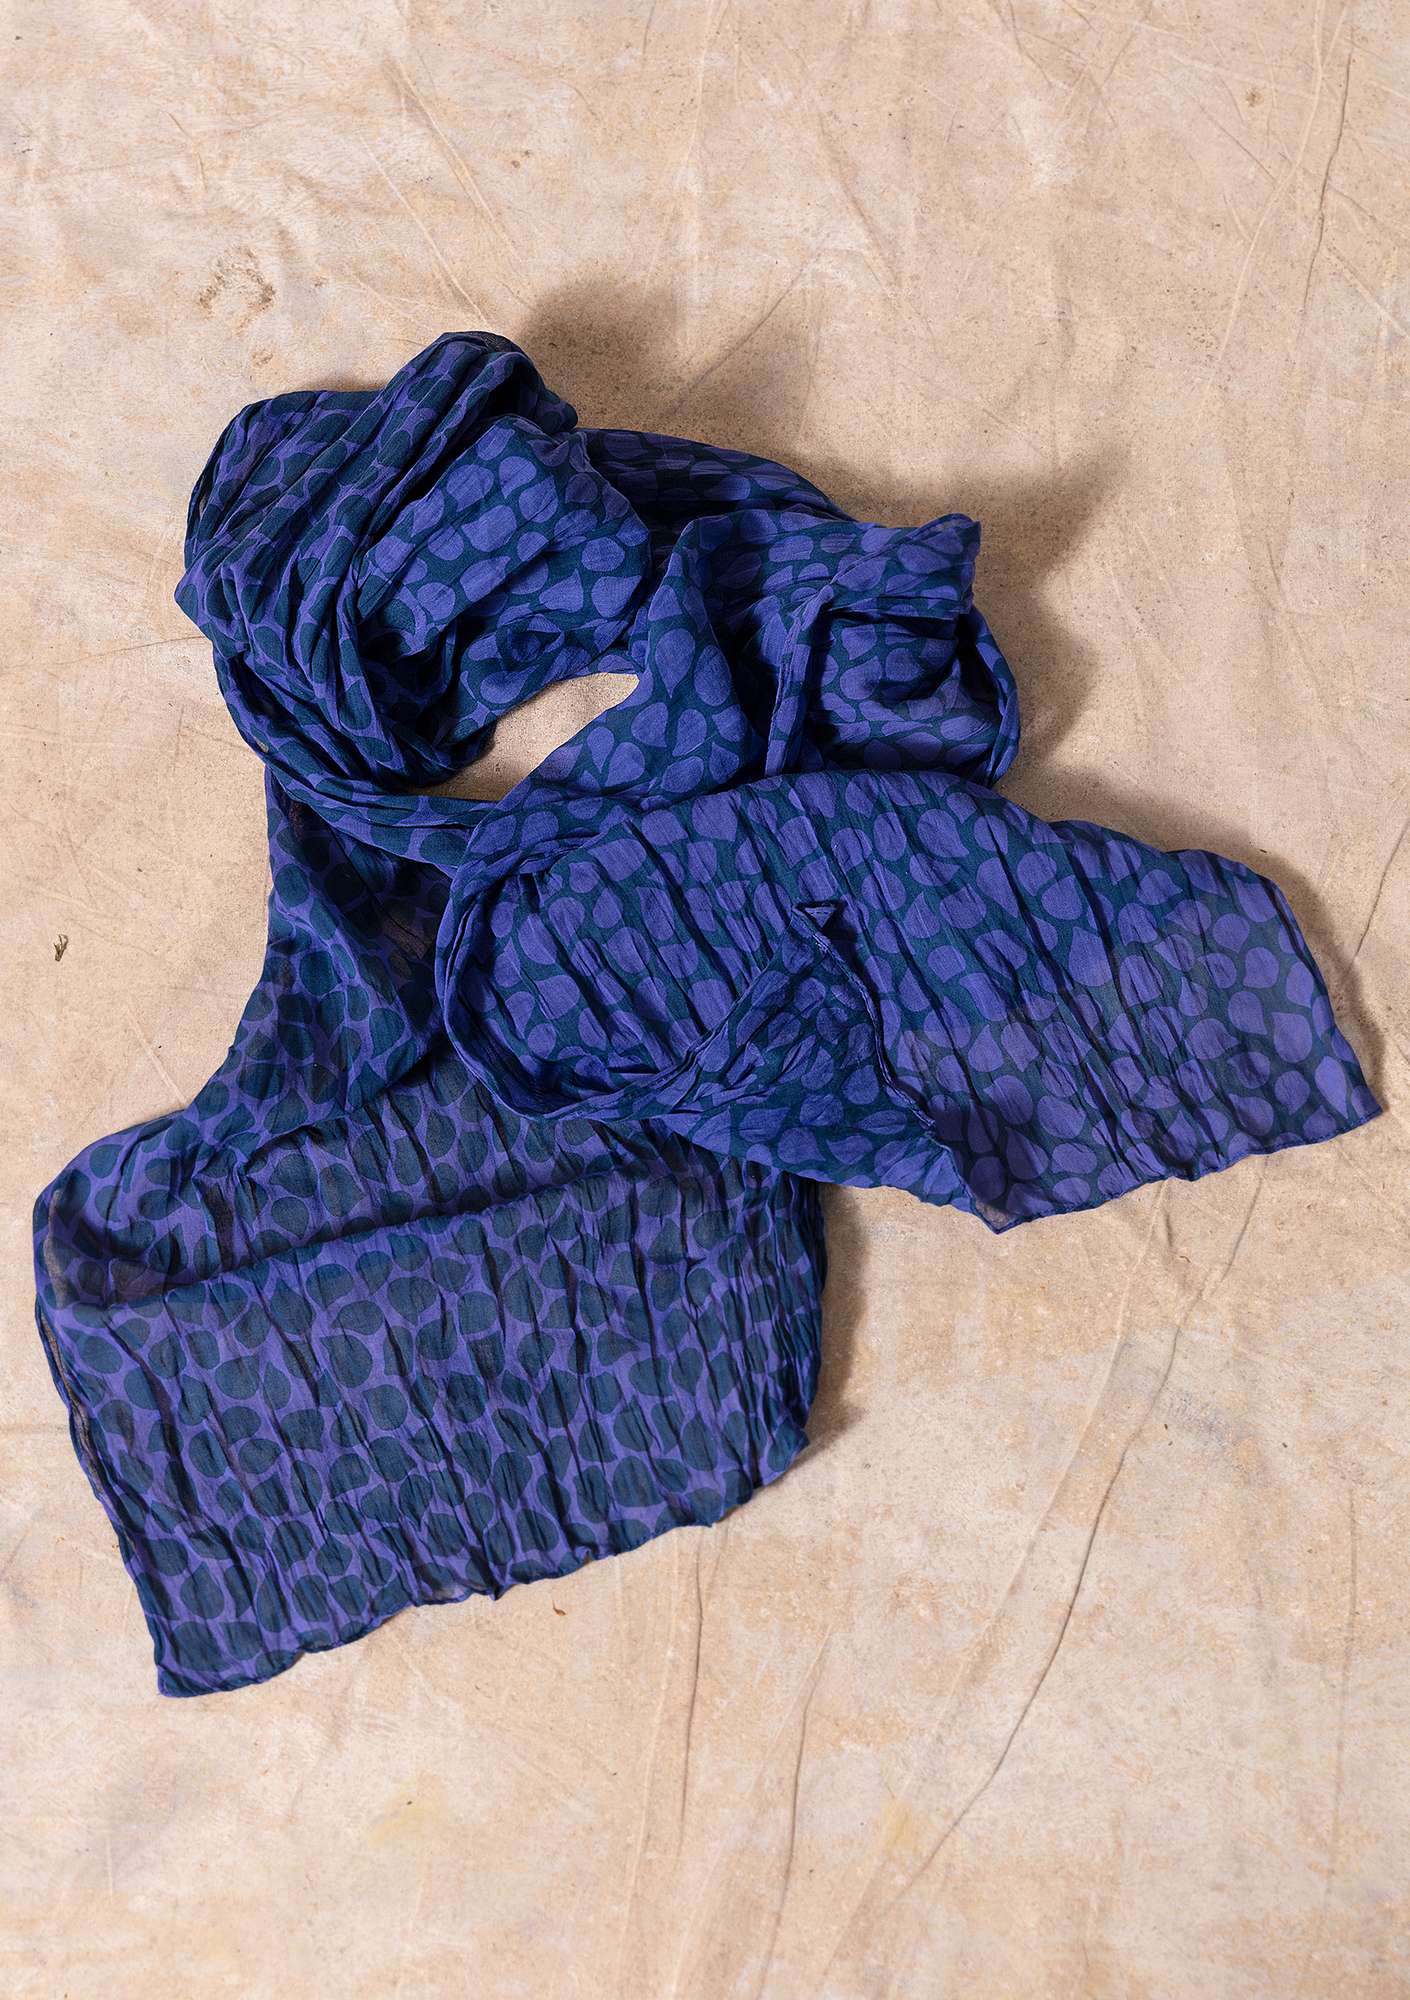 “Serafina  organic cotton shawl indigo/patterned